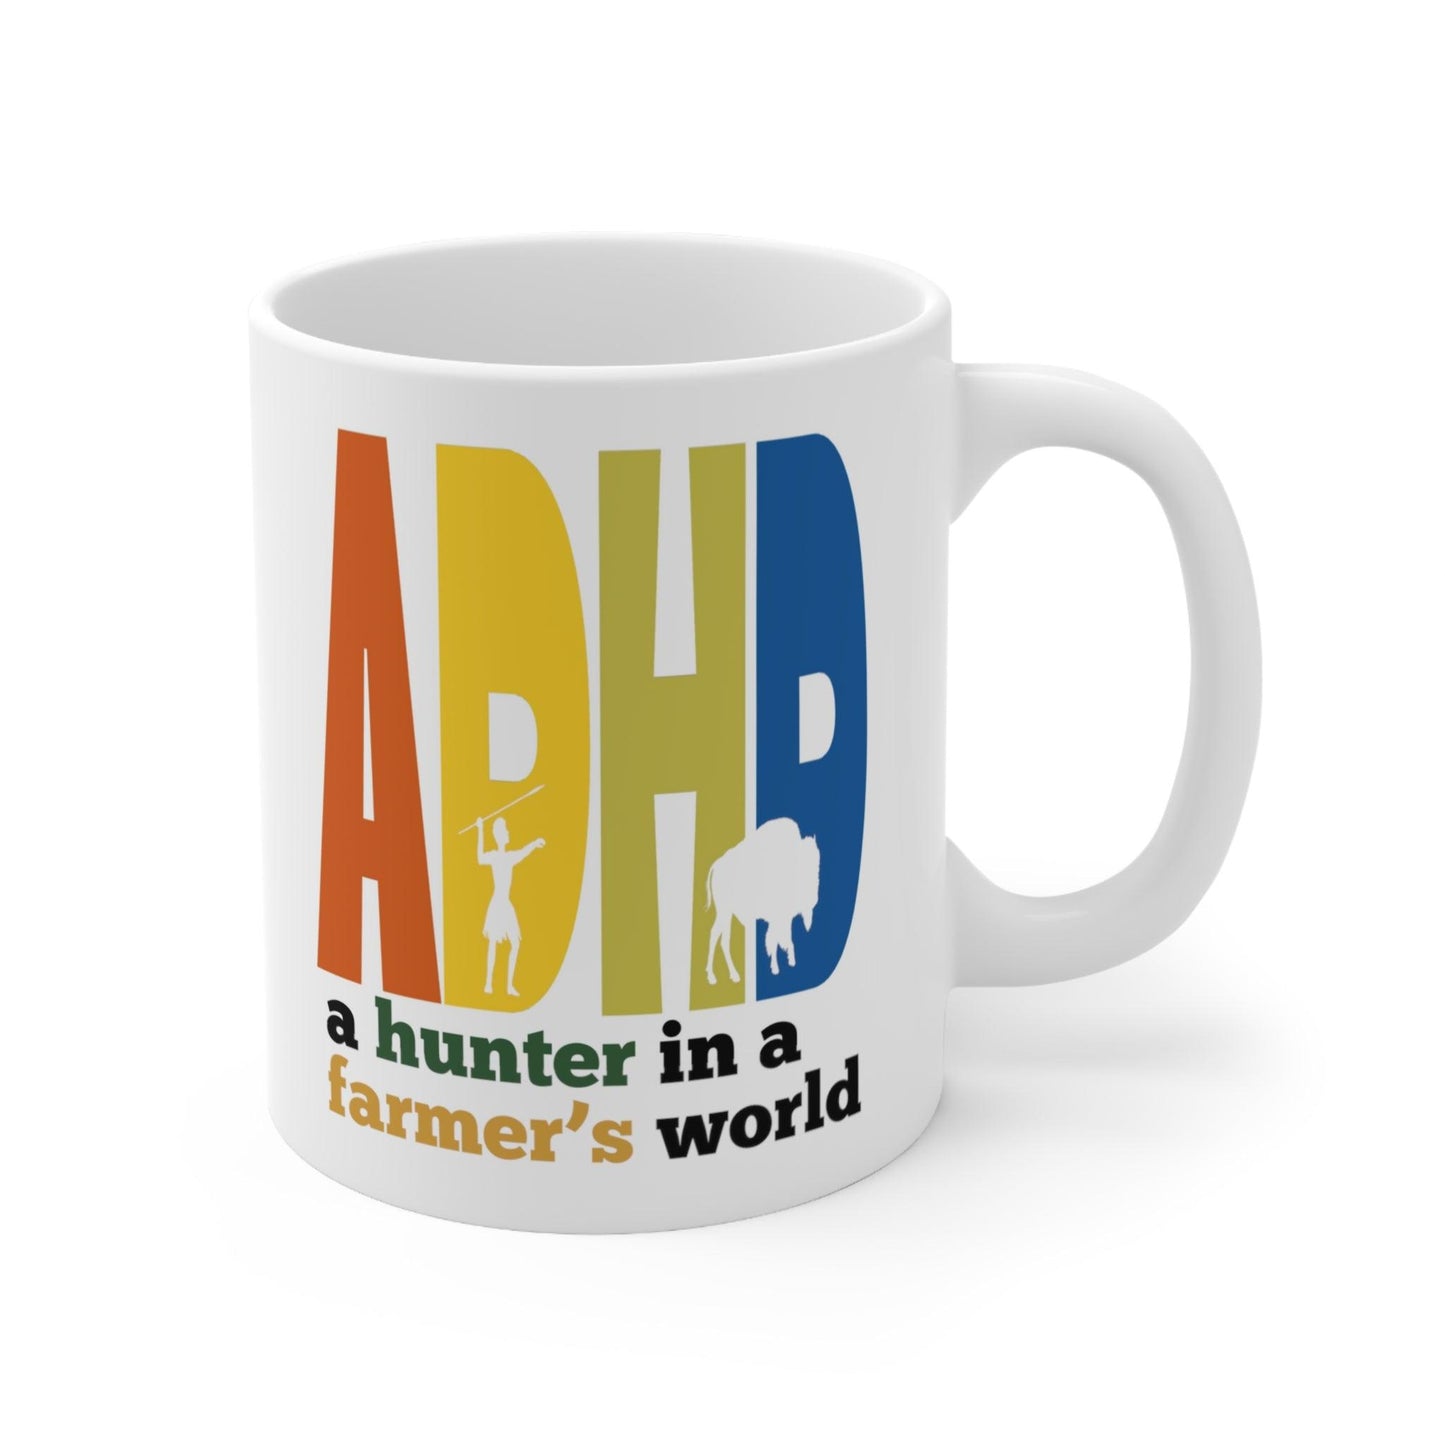 ADHD: A Hunter in a Farmer's World Gift Mug - Embrace Neurodiversity! - Fidget and Focus